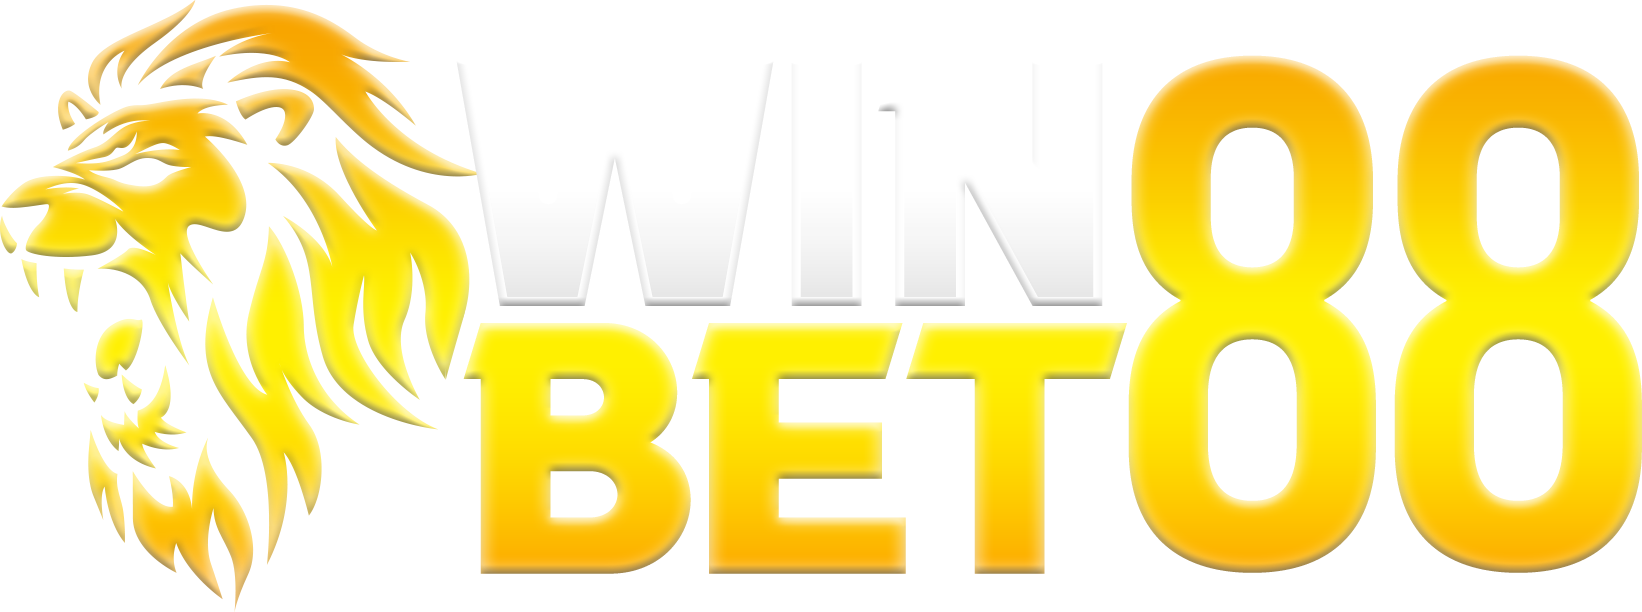 Winbet88 Casino Website Official Mirror List